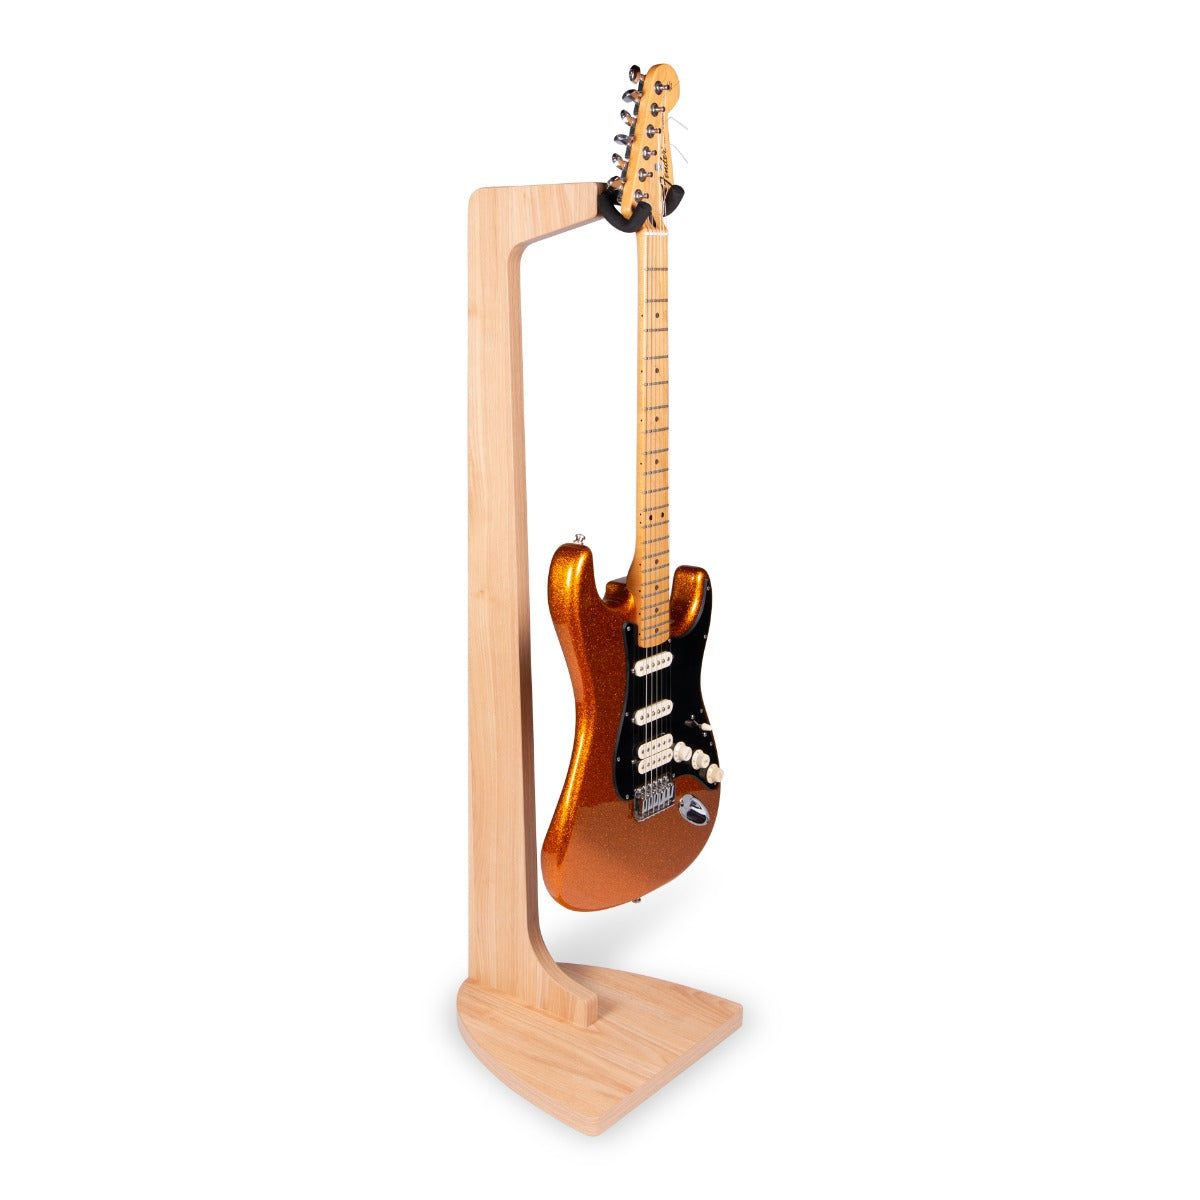 Gator Frameworks Elite Series Hanging Guitar Stand - Maple, View 7